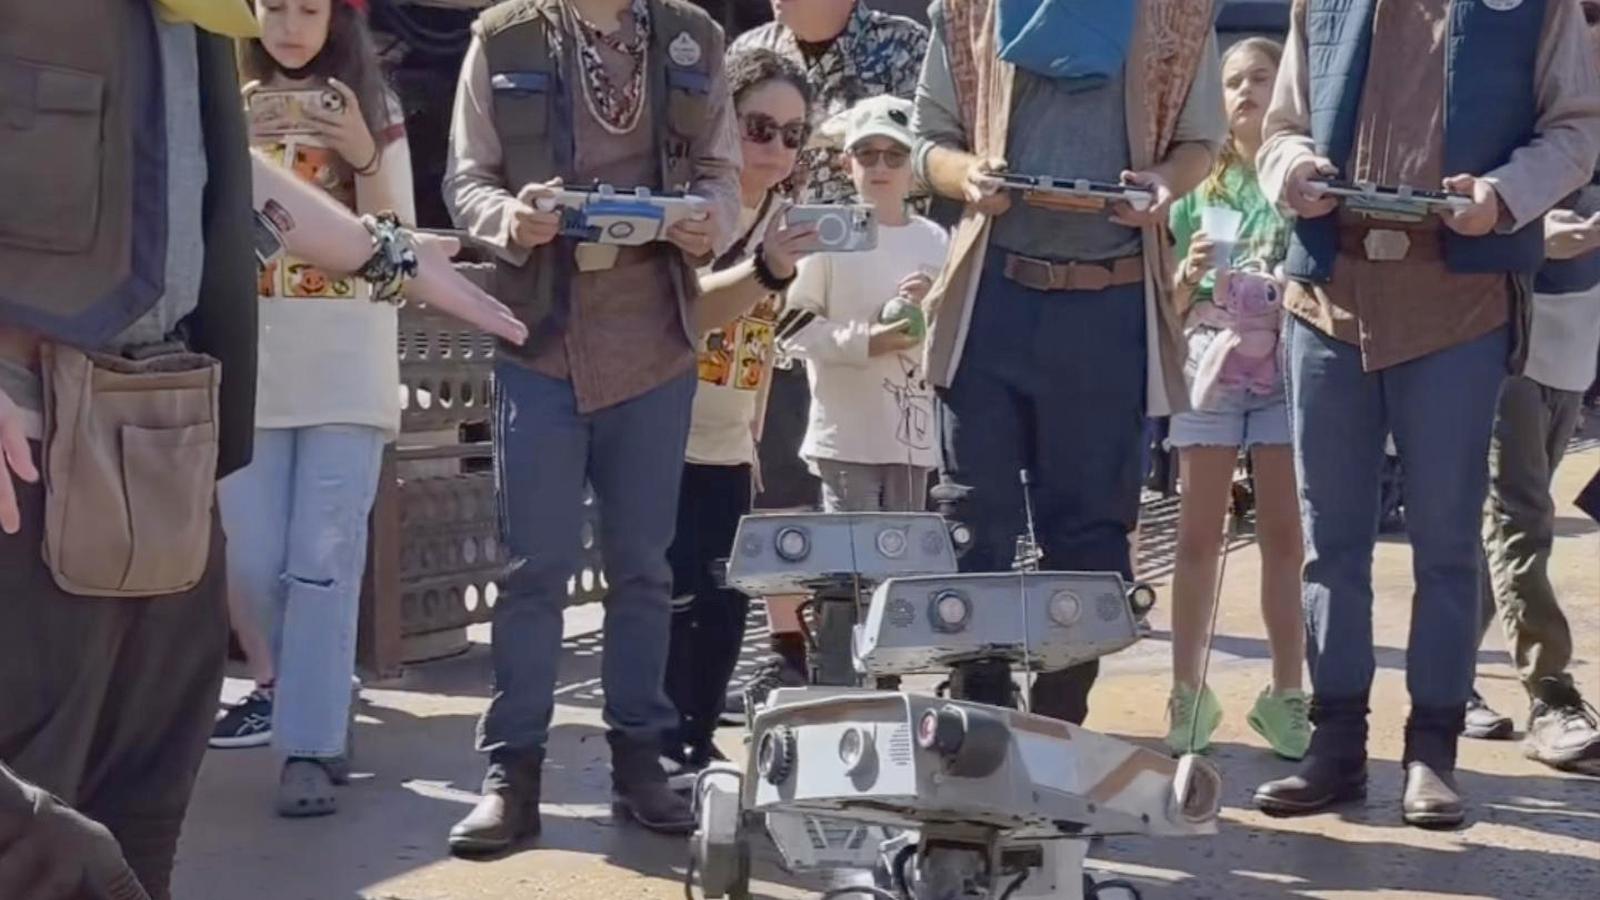 Droids being controlled by Steam Decks at Disneyland